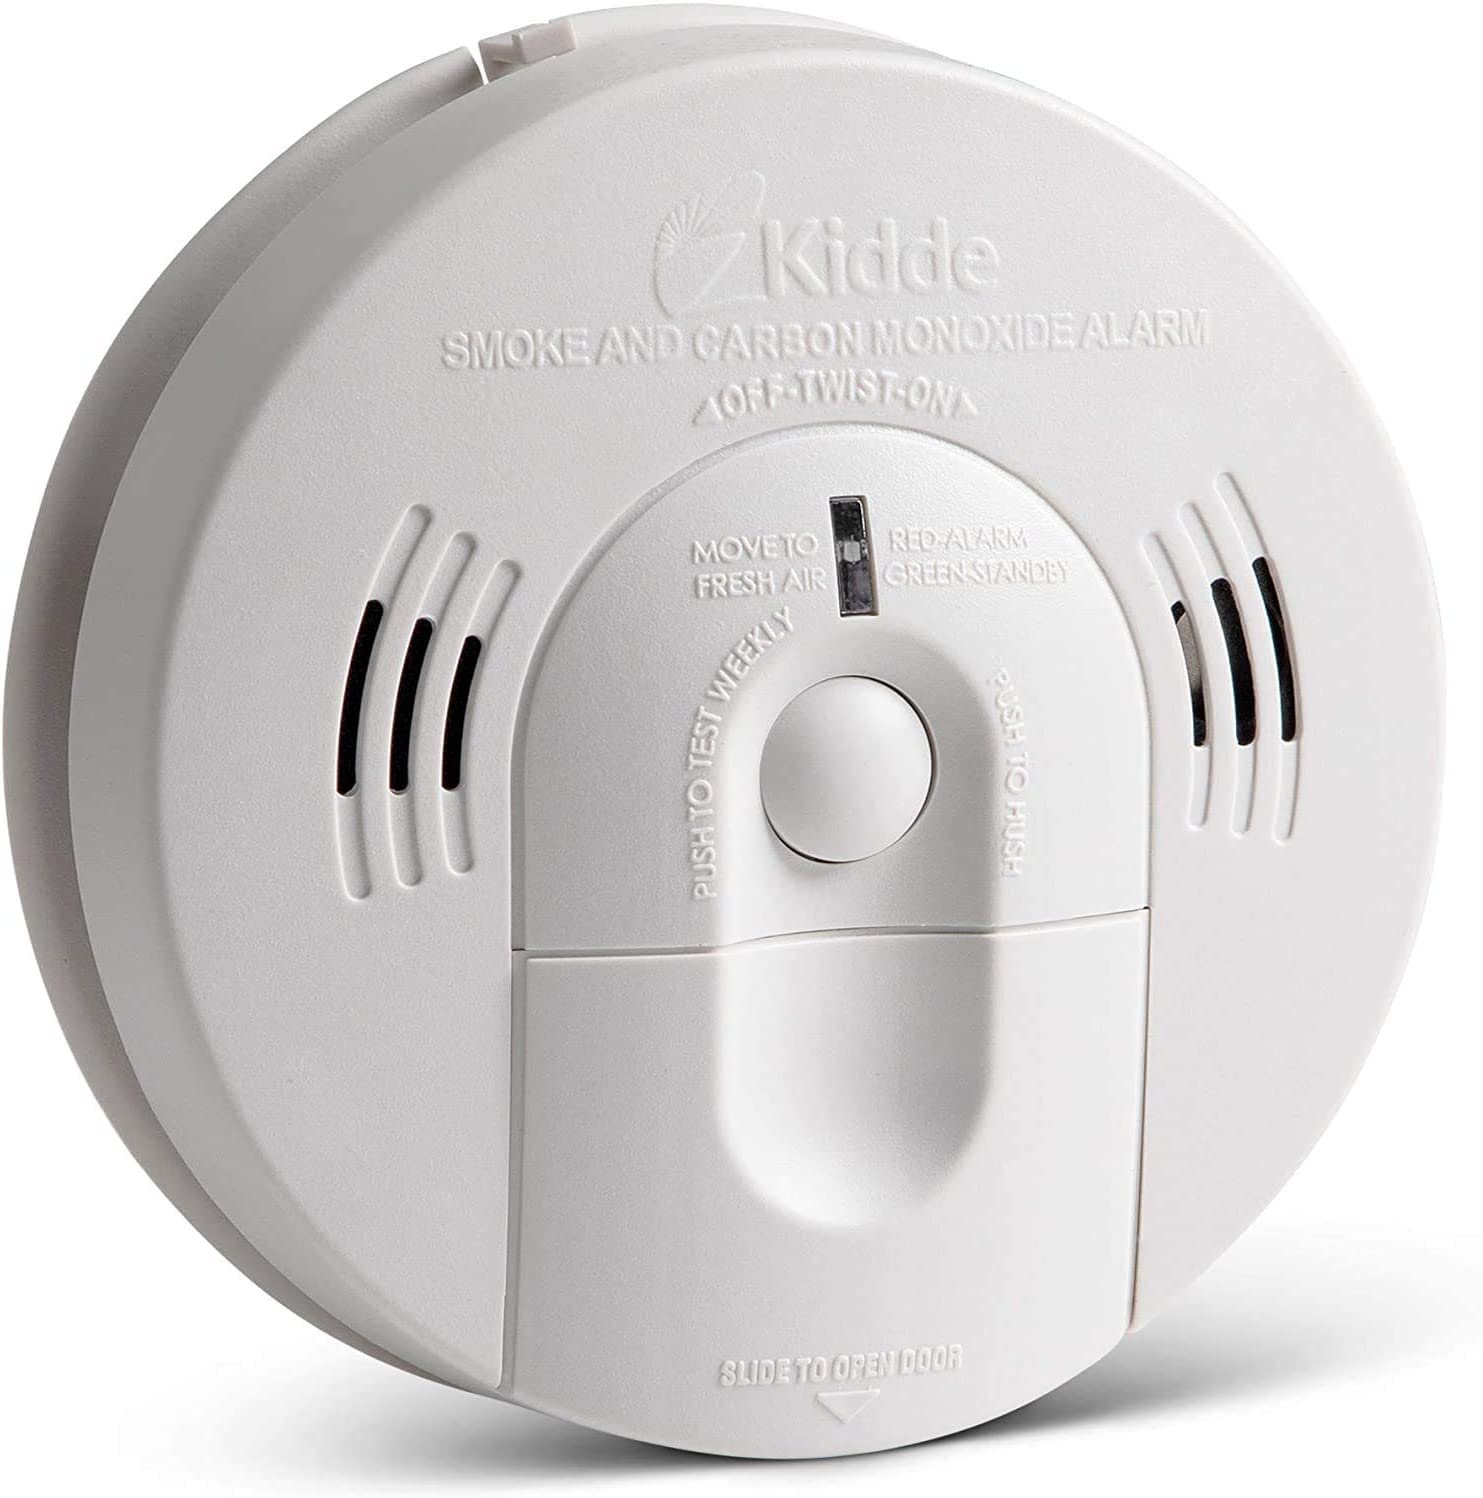 kiddie smoke alarm and carbon monoxide detector